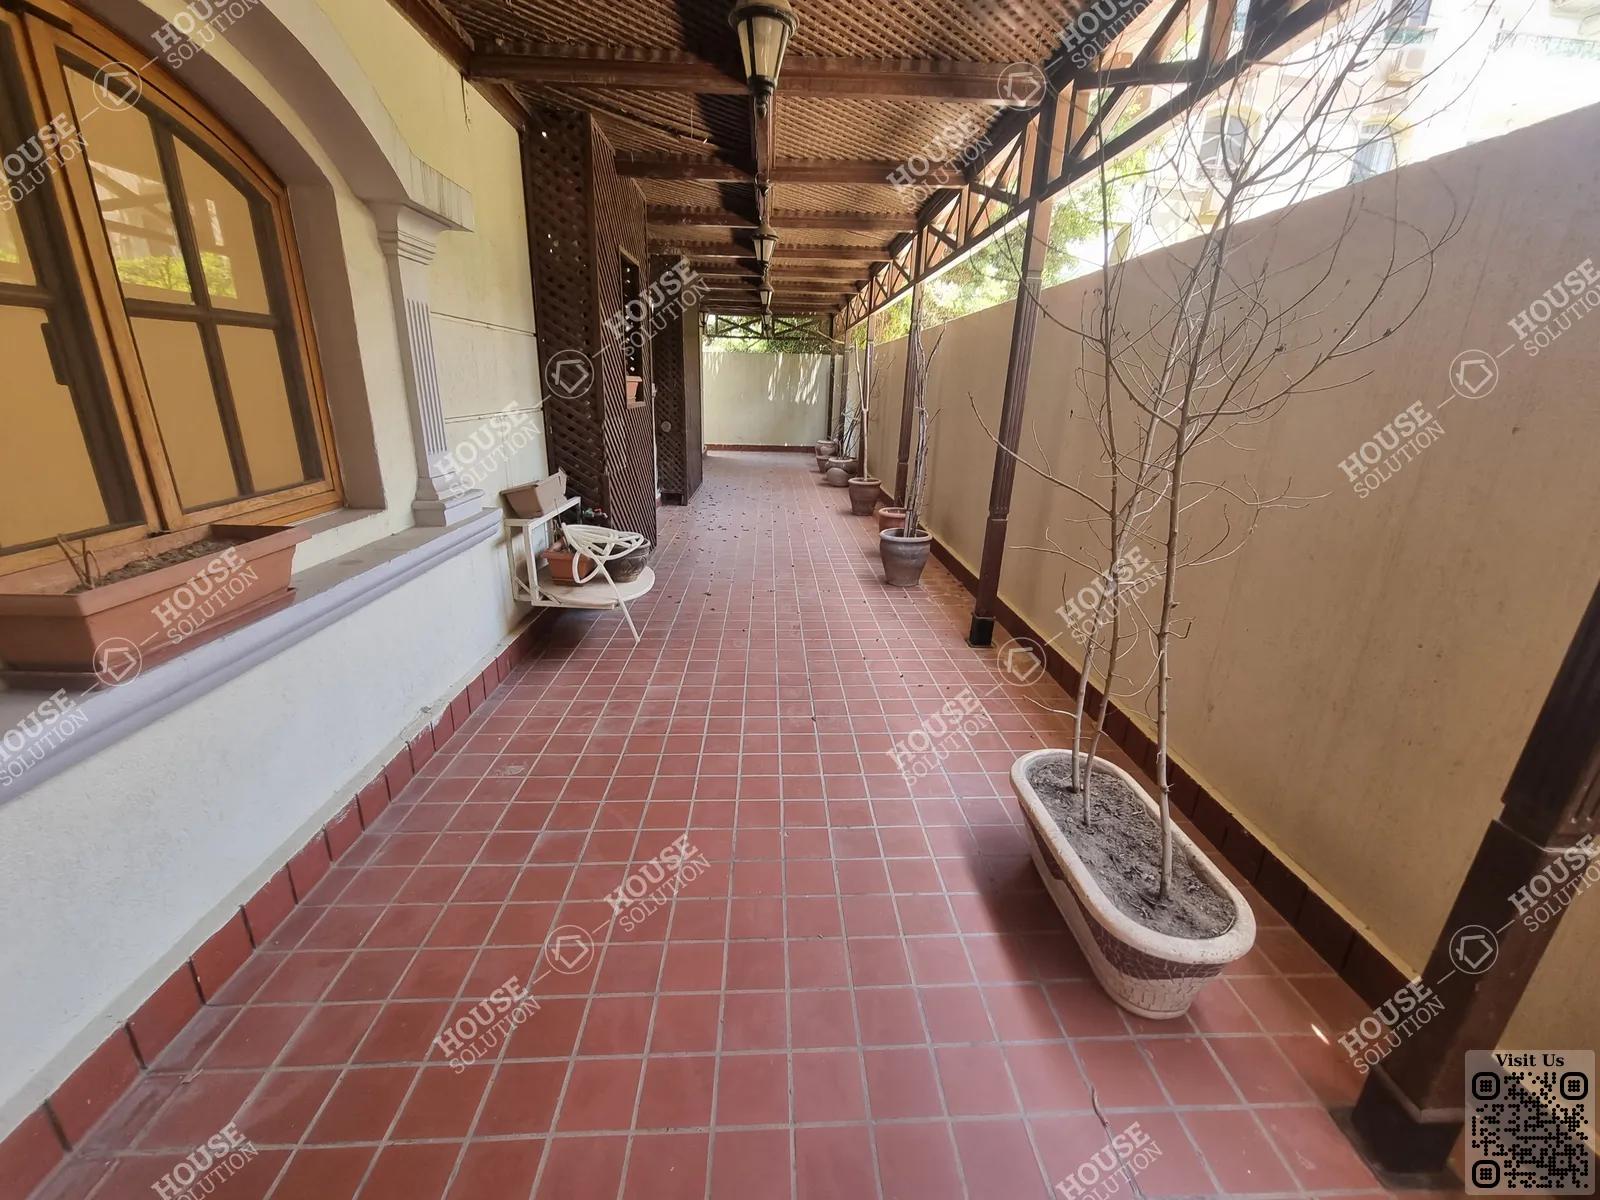 TERRACE  @ Ground Floors For Rent In Maadi Maadi Degla Area: 300 m² consists of 3 Bedrooms 2 Bathrooms Semi furnished 5 stars #3344-0